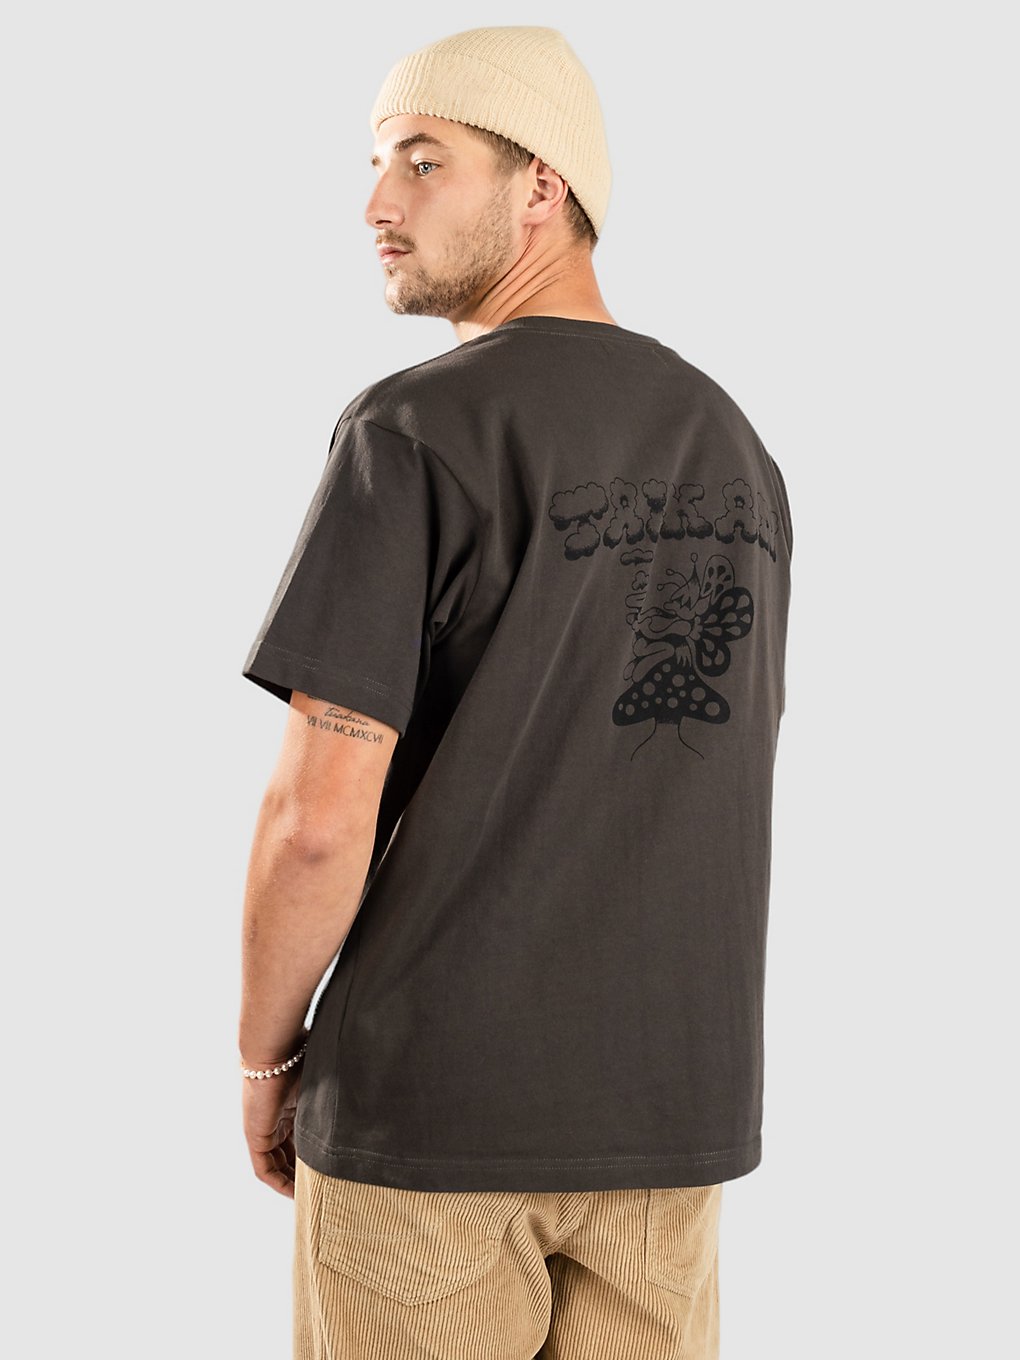 Taikan By Matt Gazzola Smoke T-Shirt charcoal kaufen